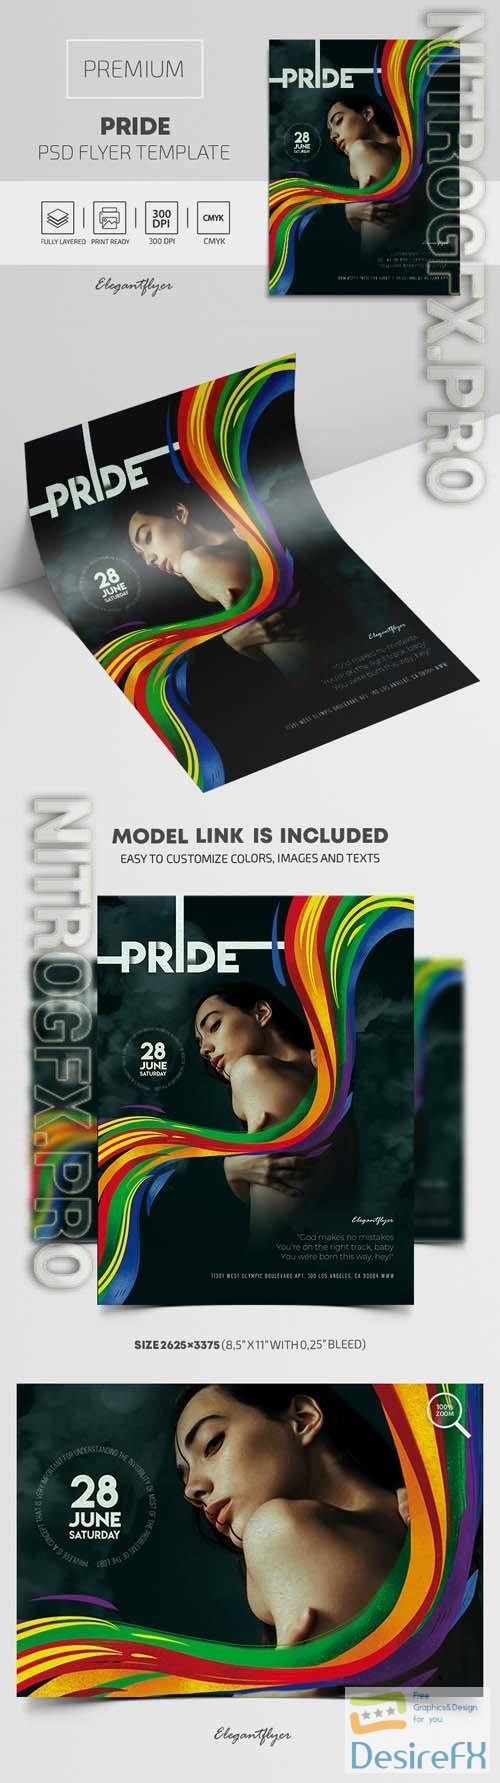 Pride Party Premium PSD Flyer Template